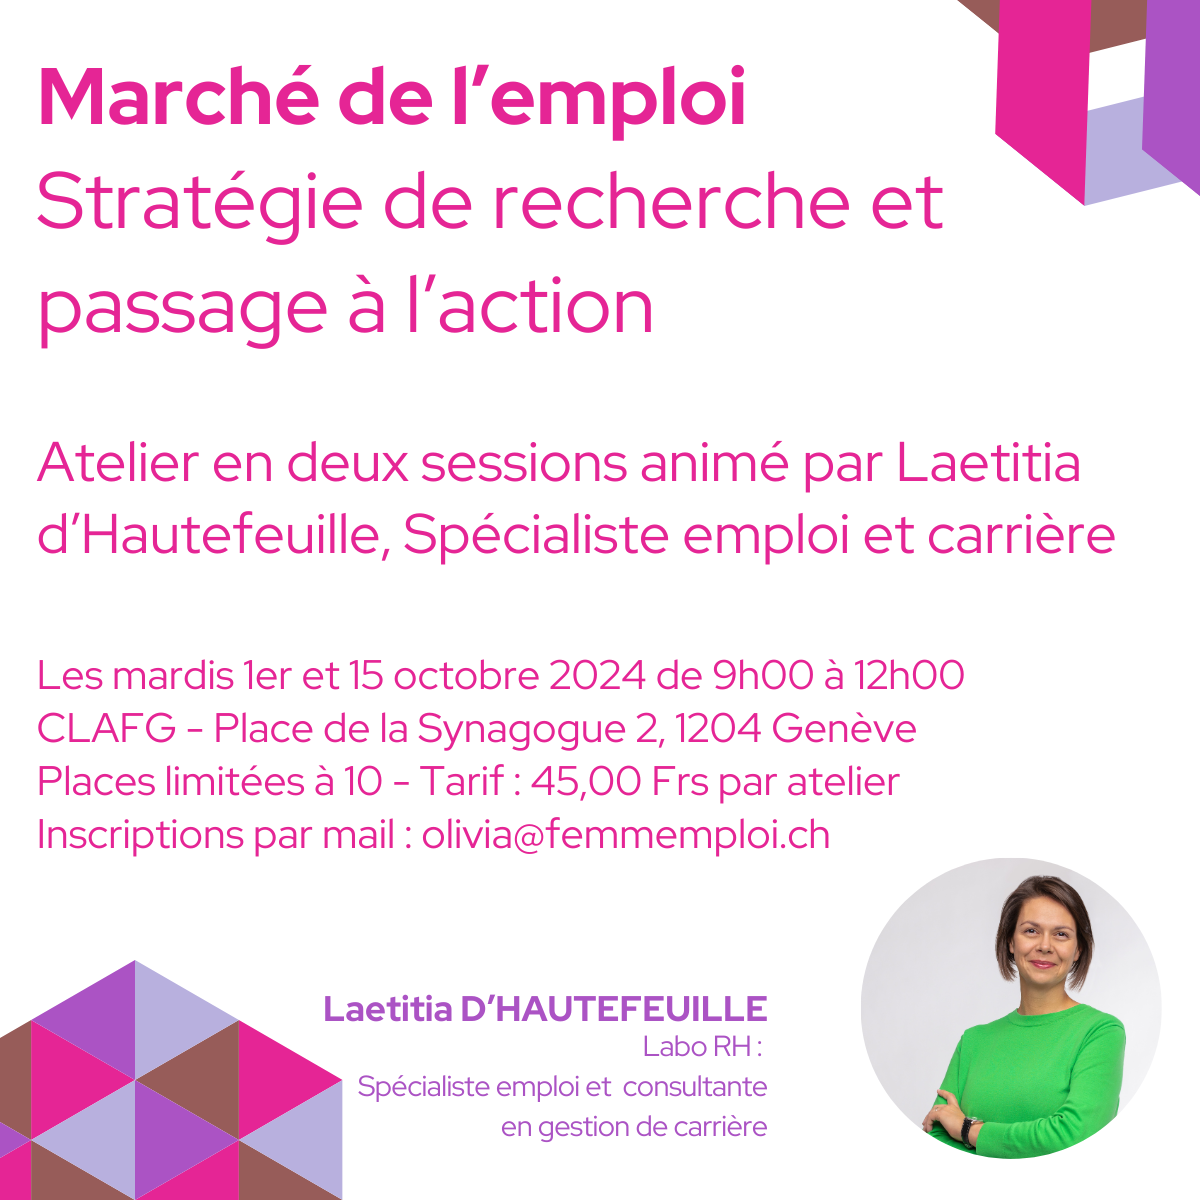 Atelier-stratégie-emploi-Laetitia-d'Hautefeuille-Genève-Femm-Emploi